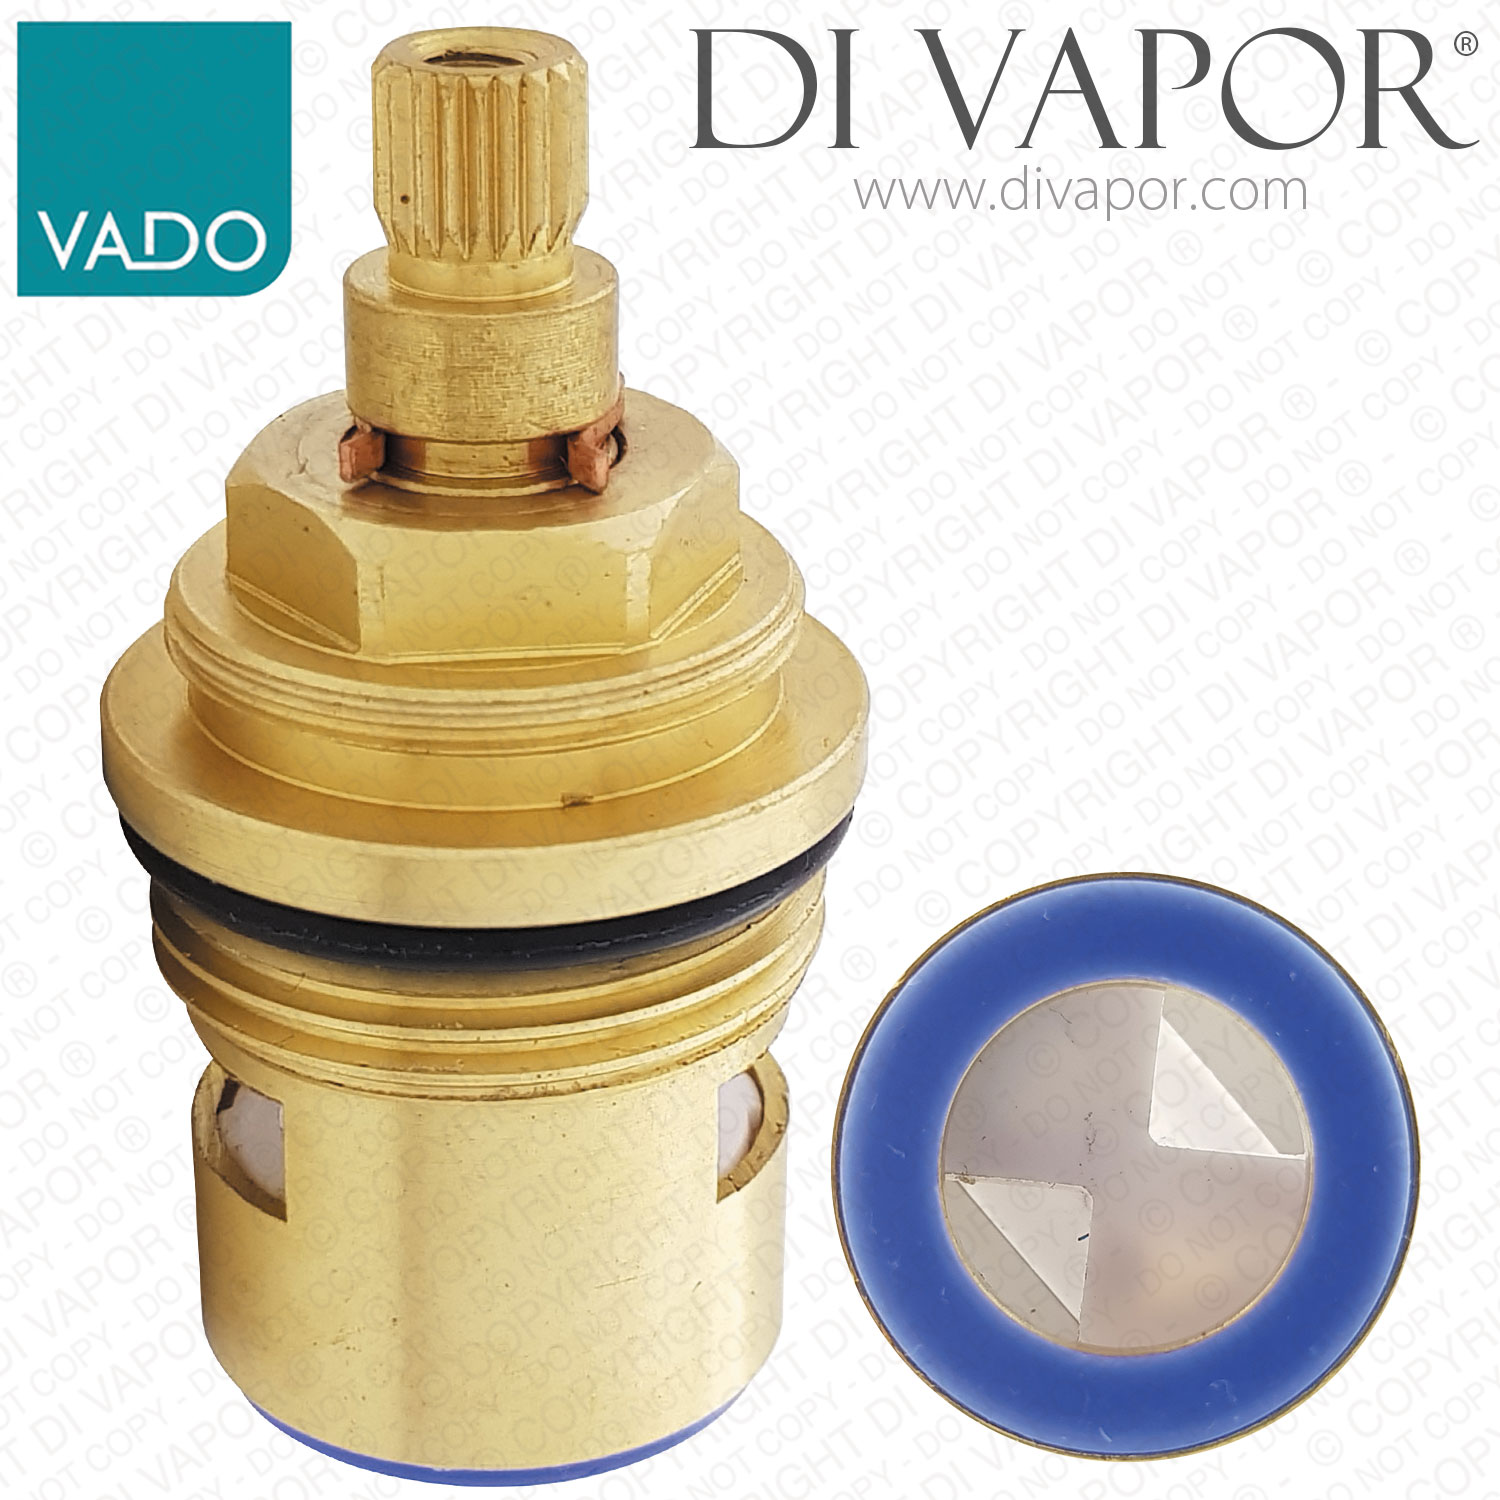 VADO CEL-002A-3/4 Ceramic Disc Flow Cartridge